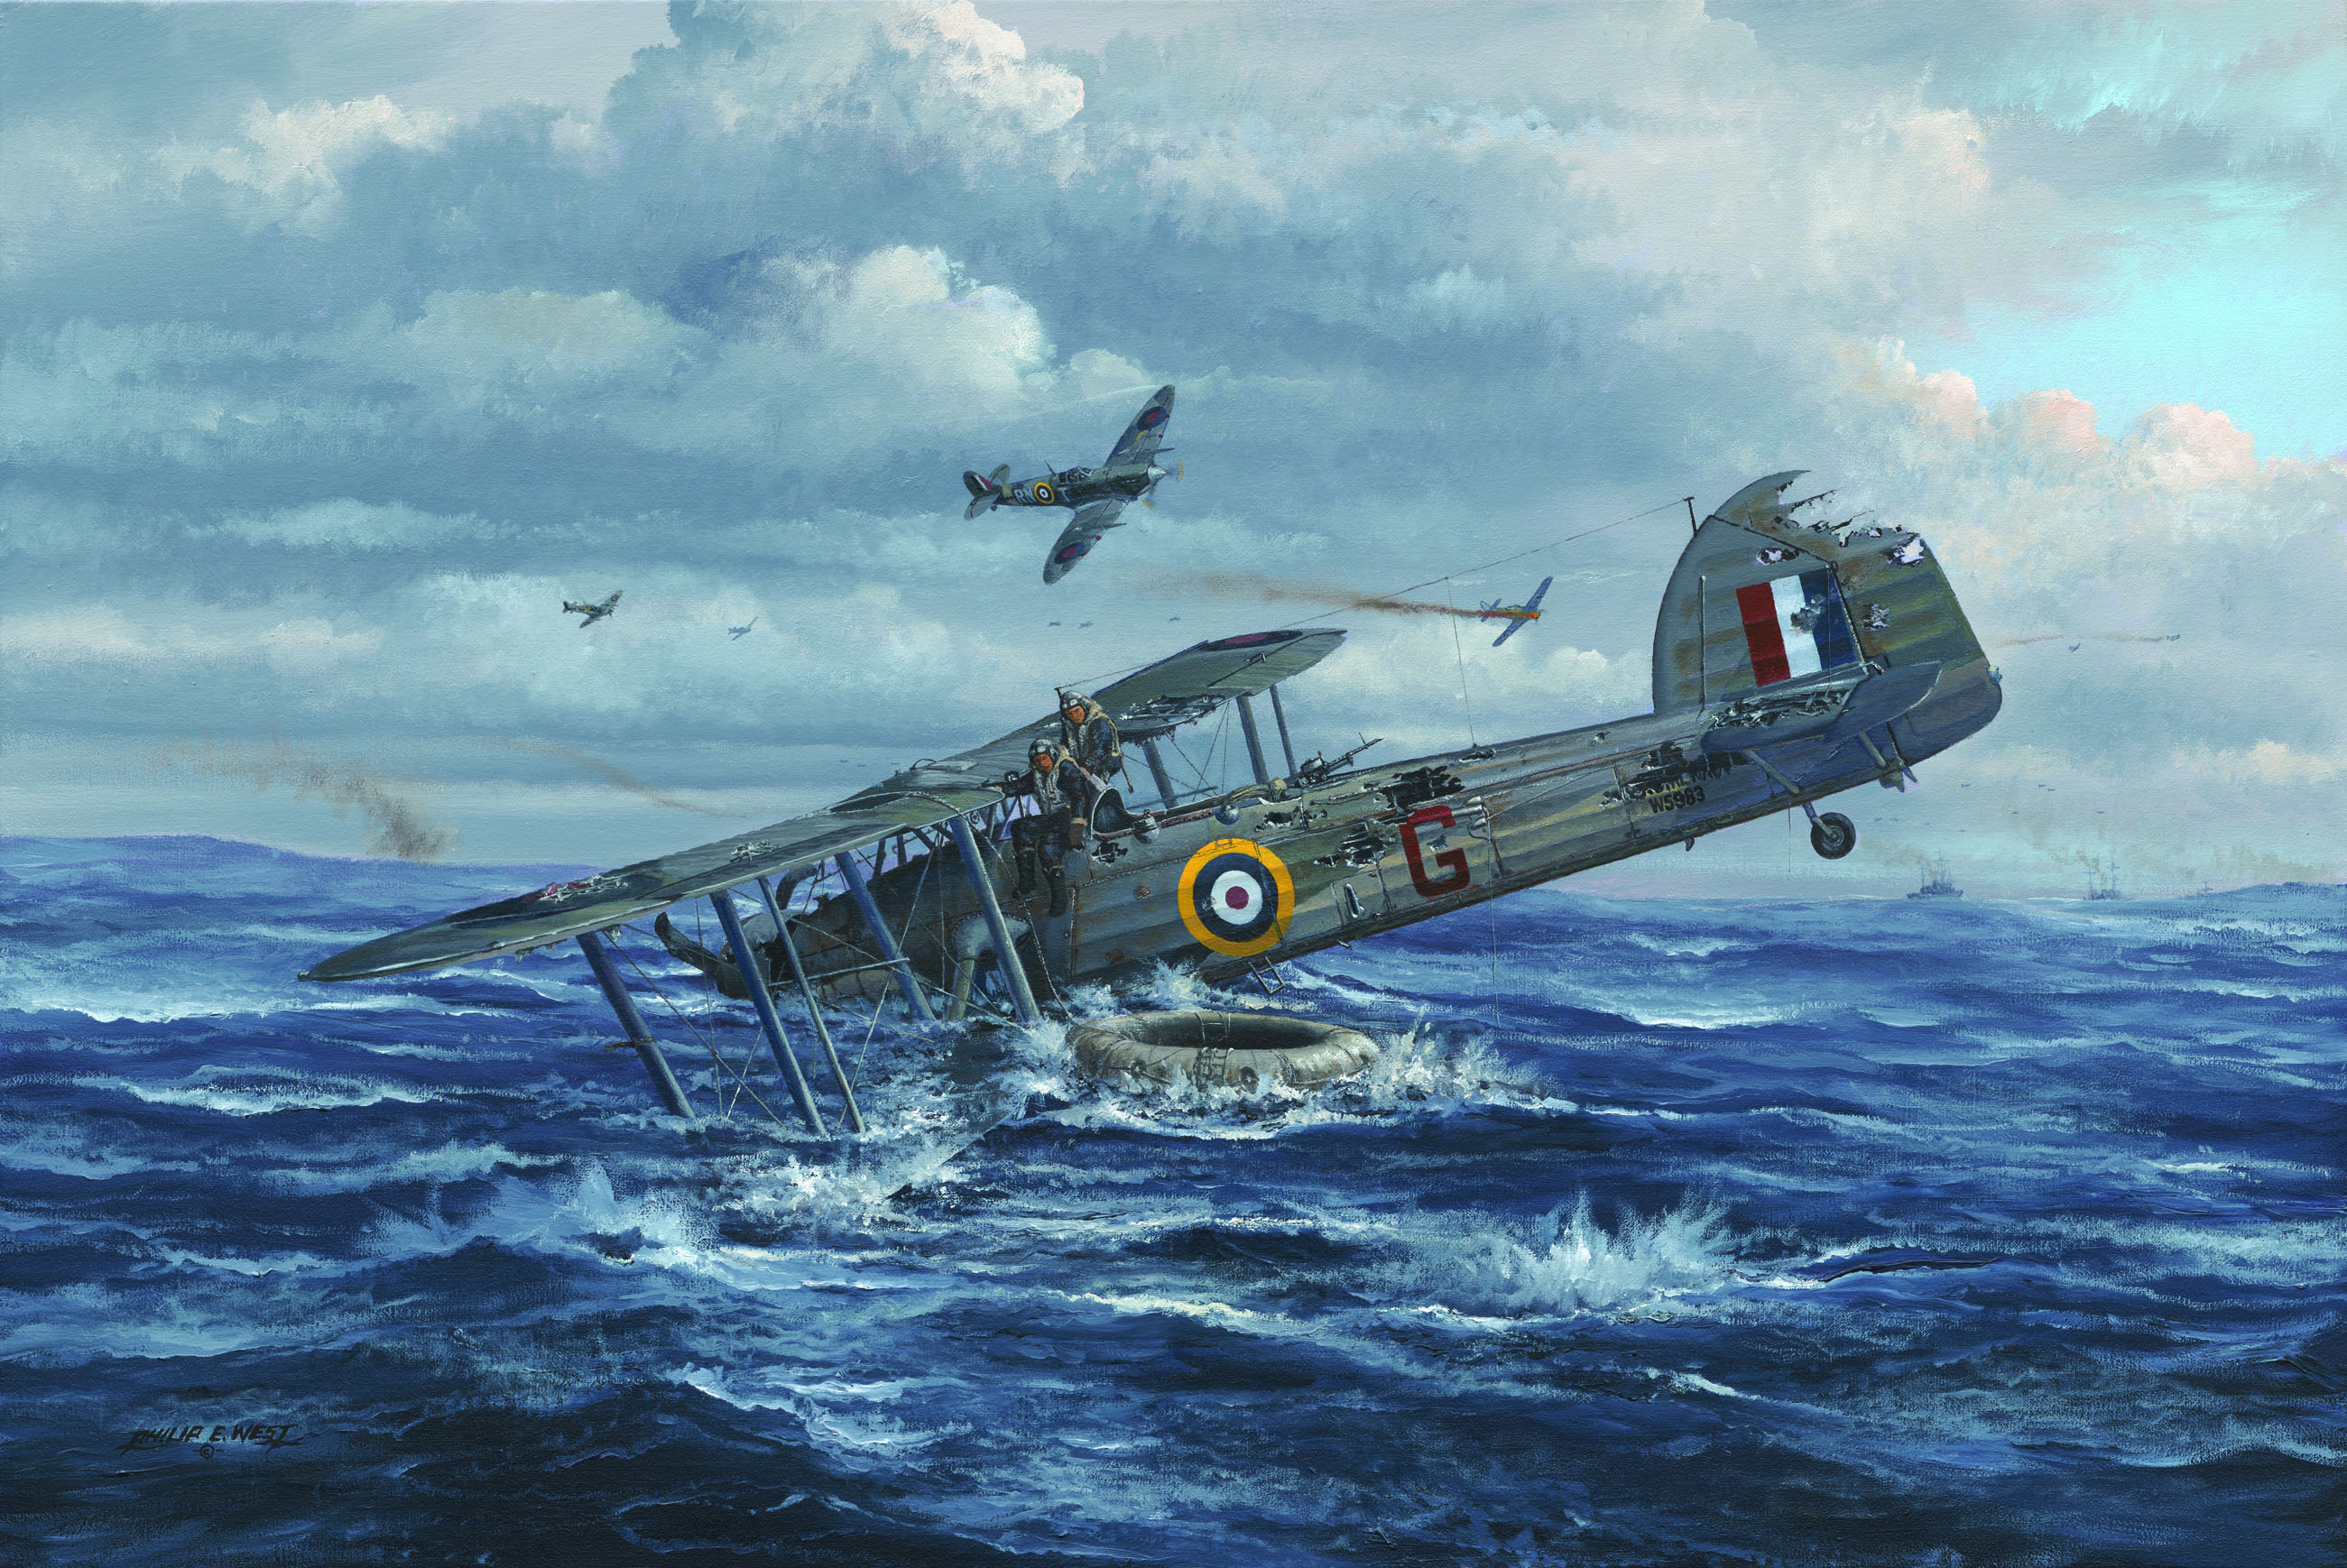 General 2601x1738 World War II aircraft airplane military military aircraft biplane Royal Navy UK Torpedo bomber Fairey Swordfish Boxart crash raft British aircraft